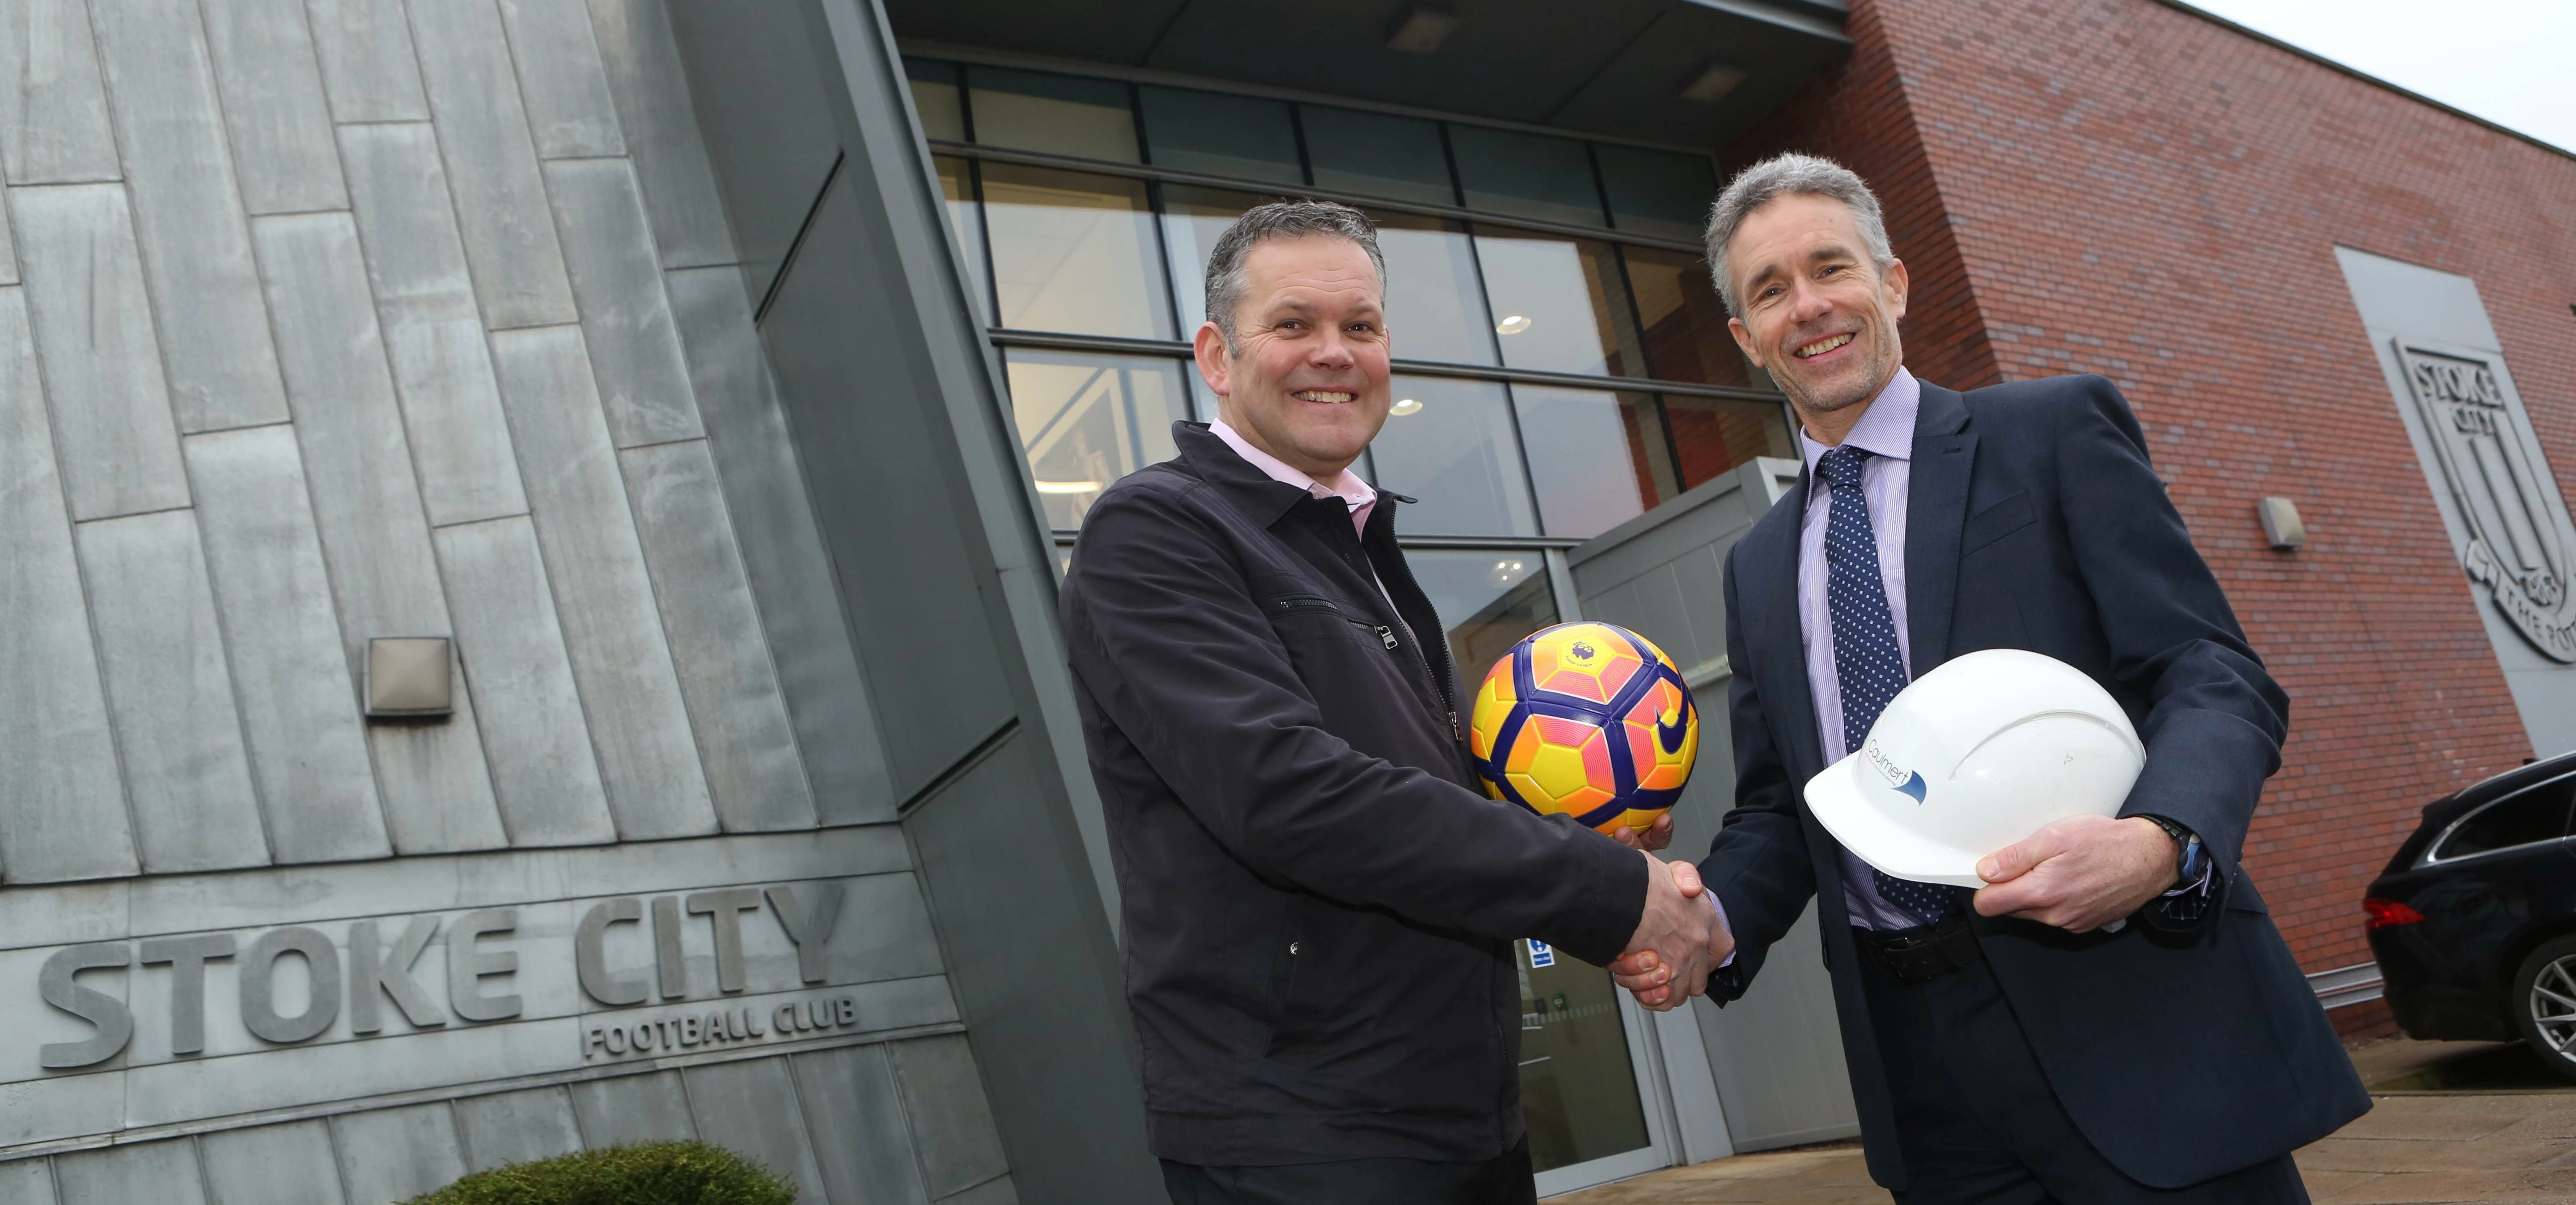 Stoke City Football Club managing director Richard Smith with Caulmert associate director Jonathan S